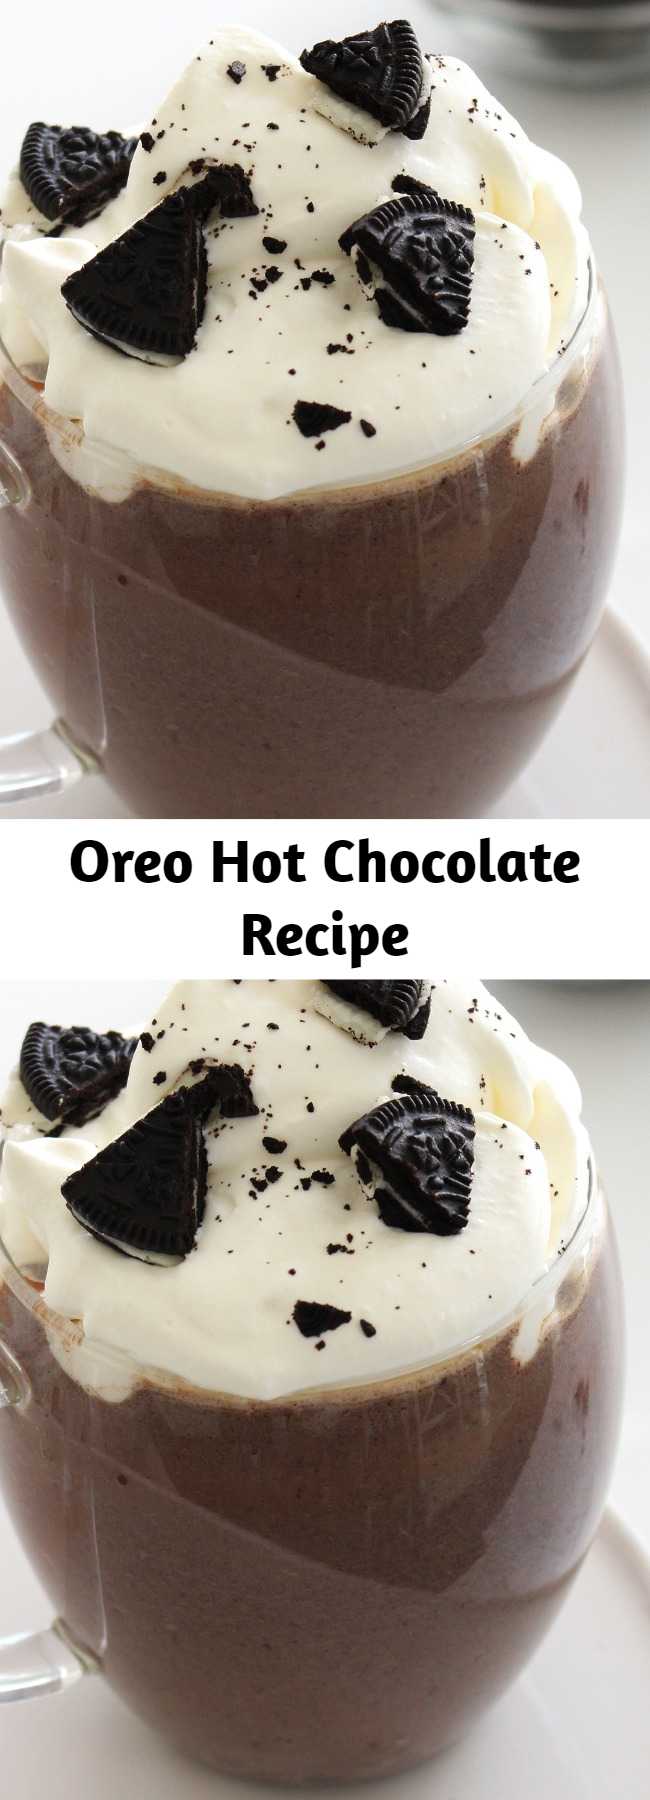 Oreo Hot Chocolate Recipe - Delicious Oreos turn regular hot chocolate into a unique, creamy Oreo-flavoured hot chocolate!